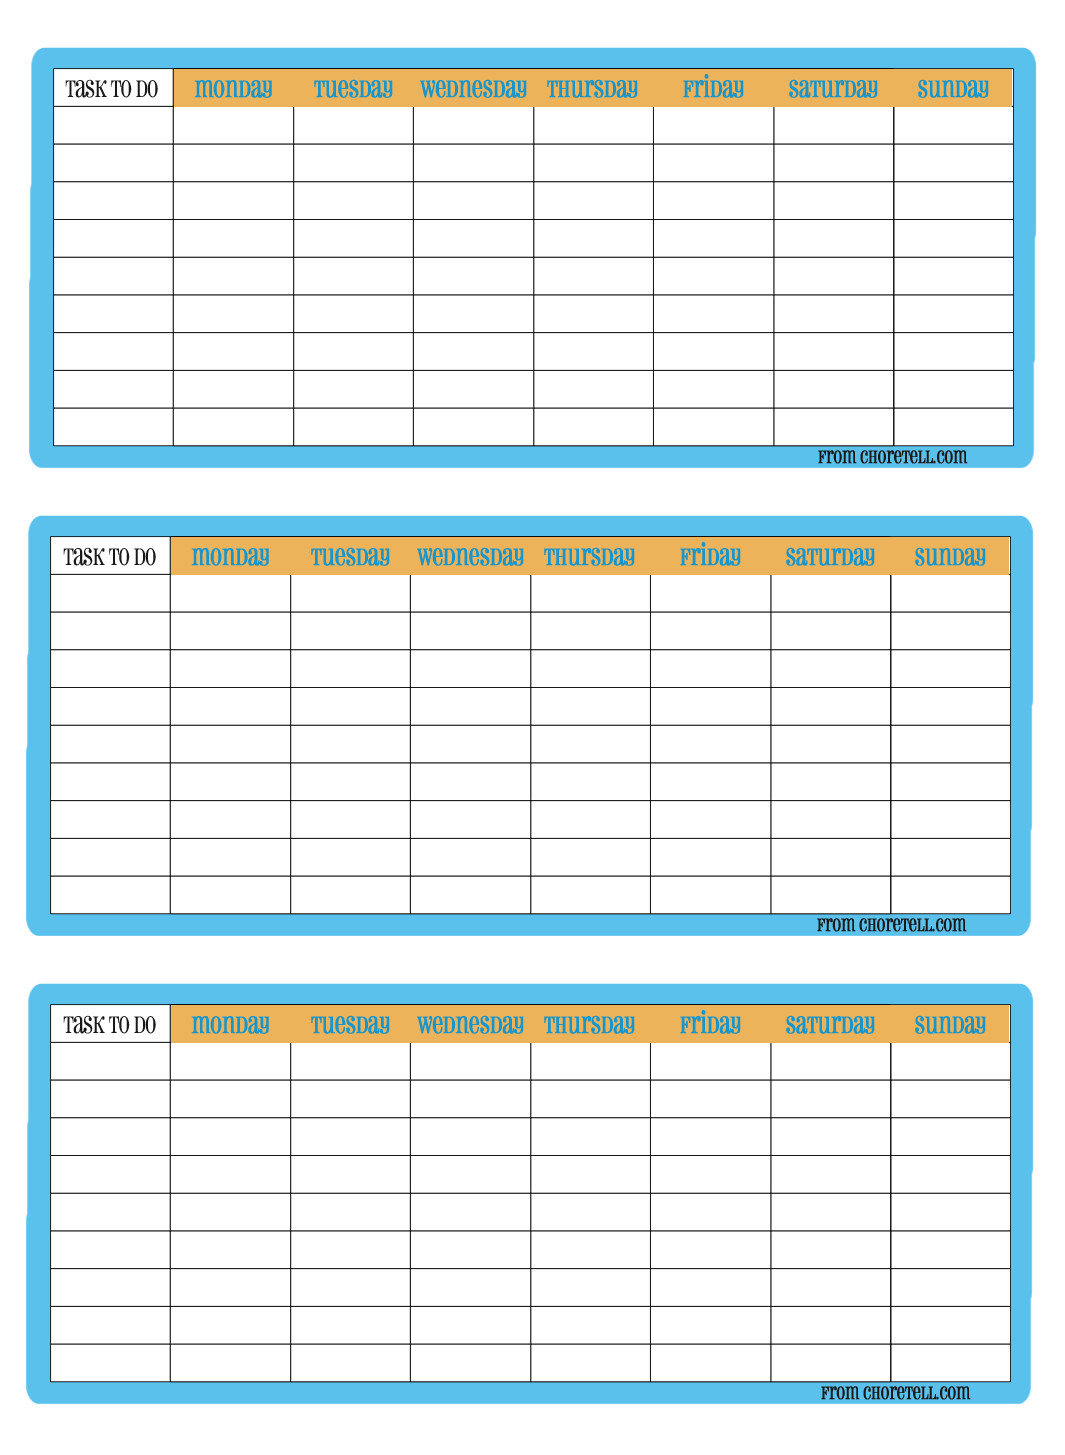 Weekly Chore Chart Printable 3 Up Printable Weekly Chore Charts From Choretell